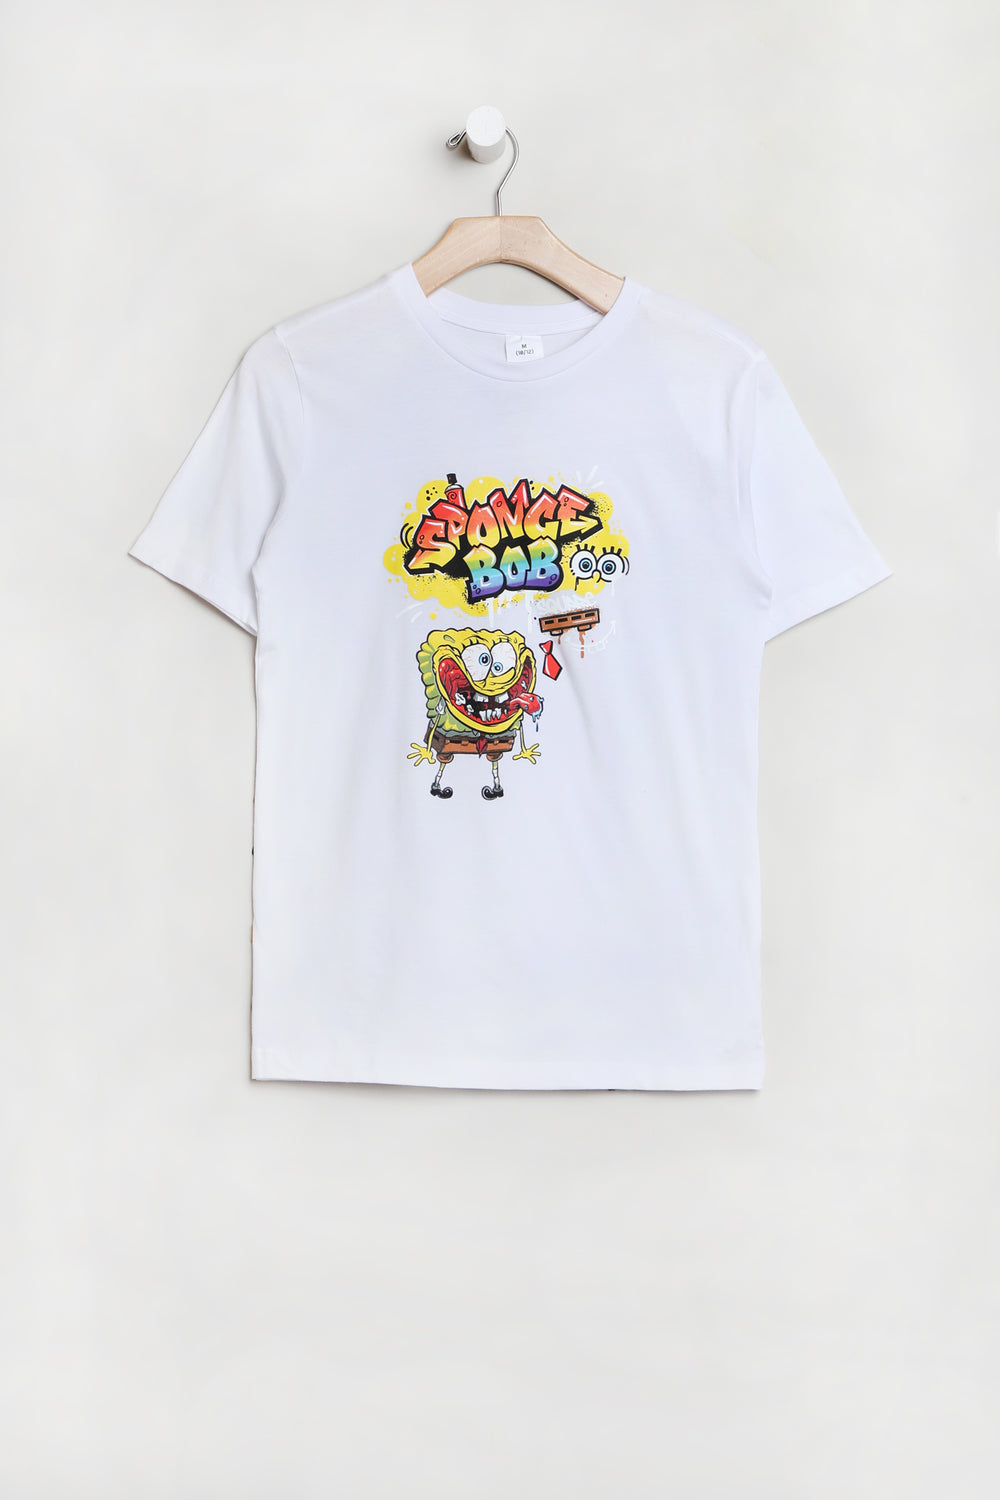 Youth SpongeBob SquarePants T-Shirt Youth SpongeBob SquarePants T-Shirt